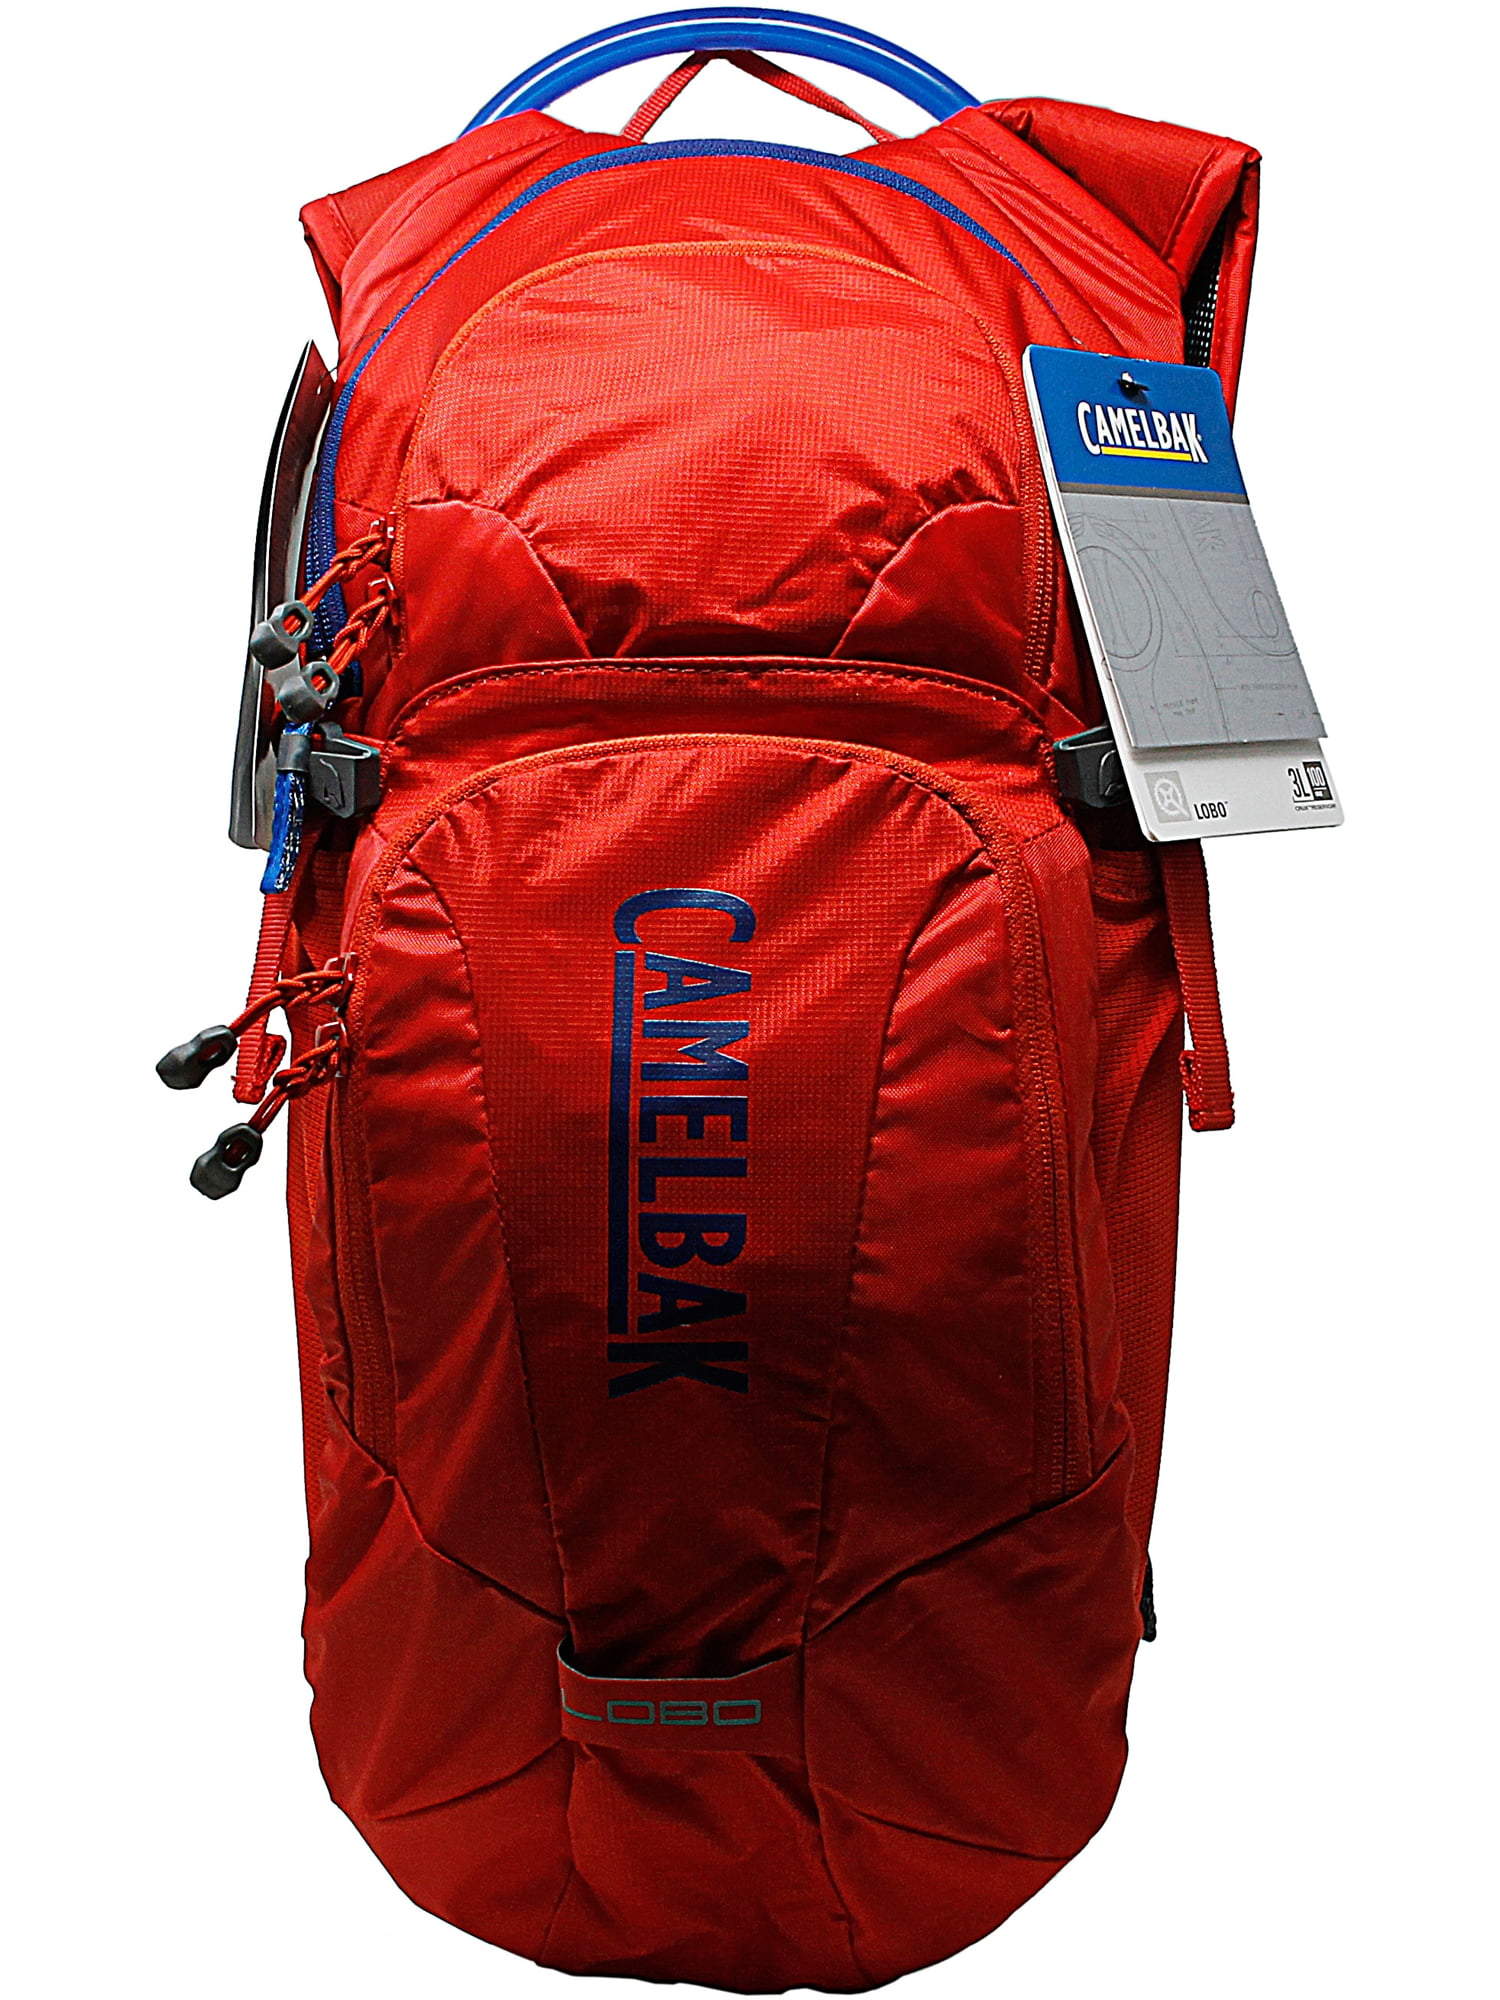 Camelbak Lobo Mountain Biking Hydration Pack Packs - Red / Blue - Walmart.com